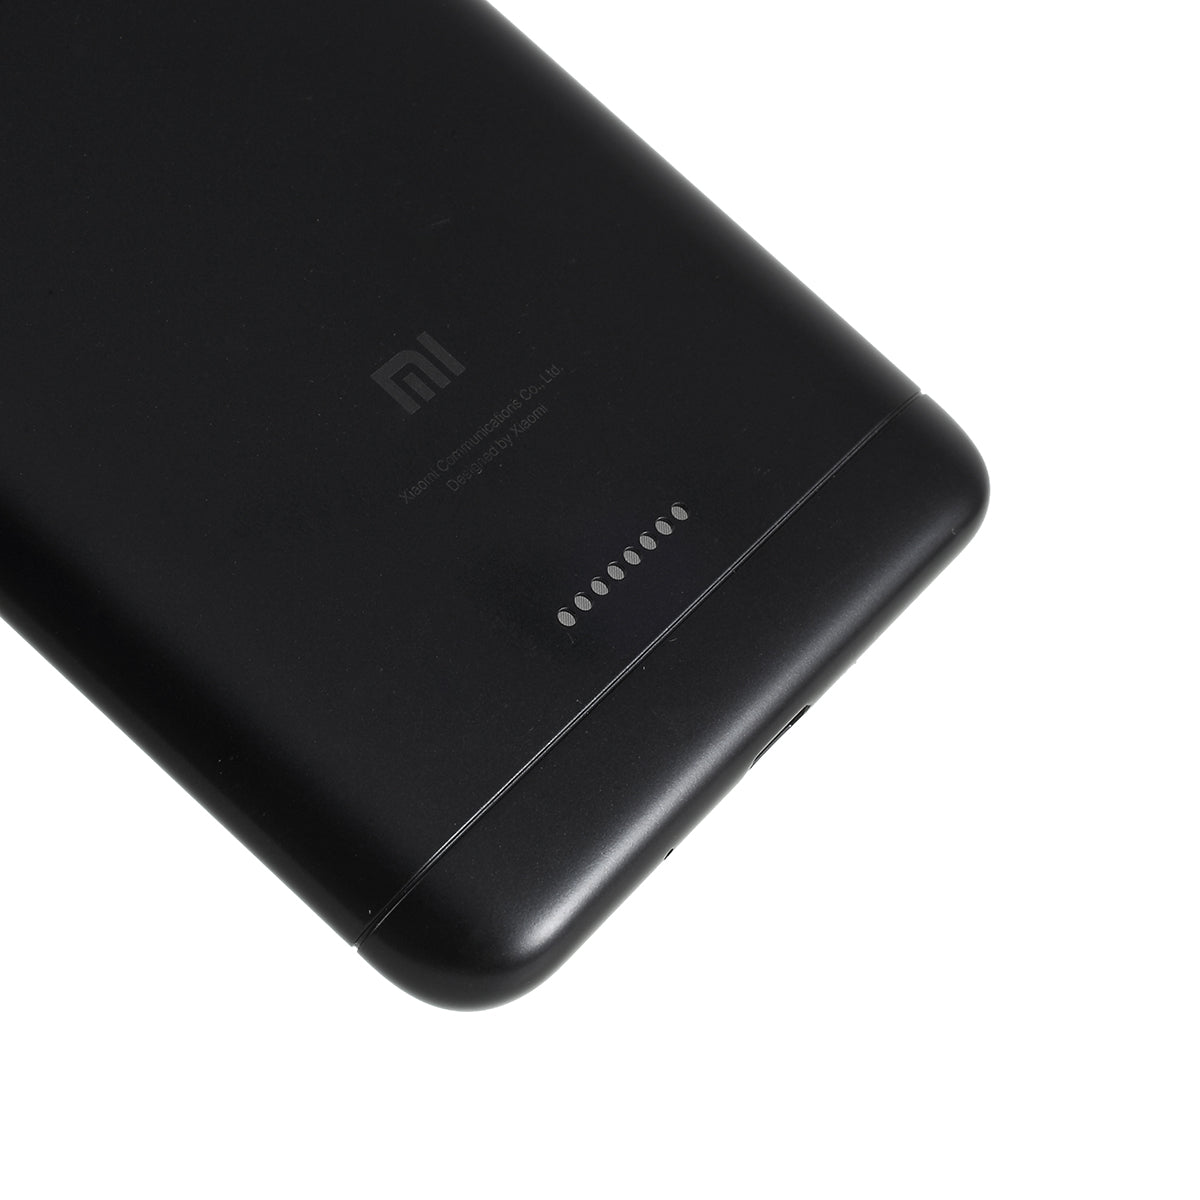 OEM Battery Housing Door Cover (Dual SIM Card) for Xiaomi Redmi 6 - Black